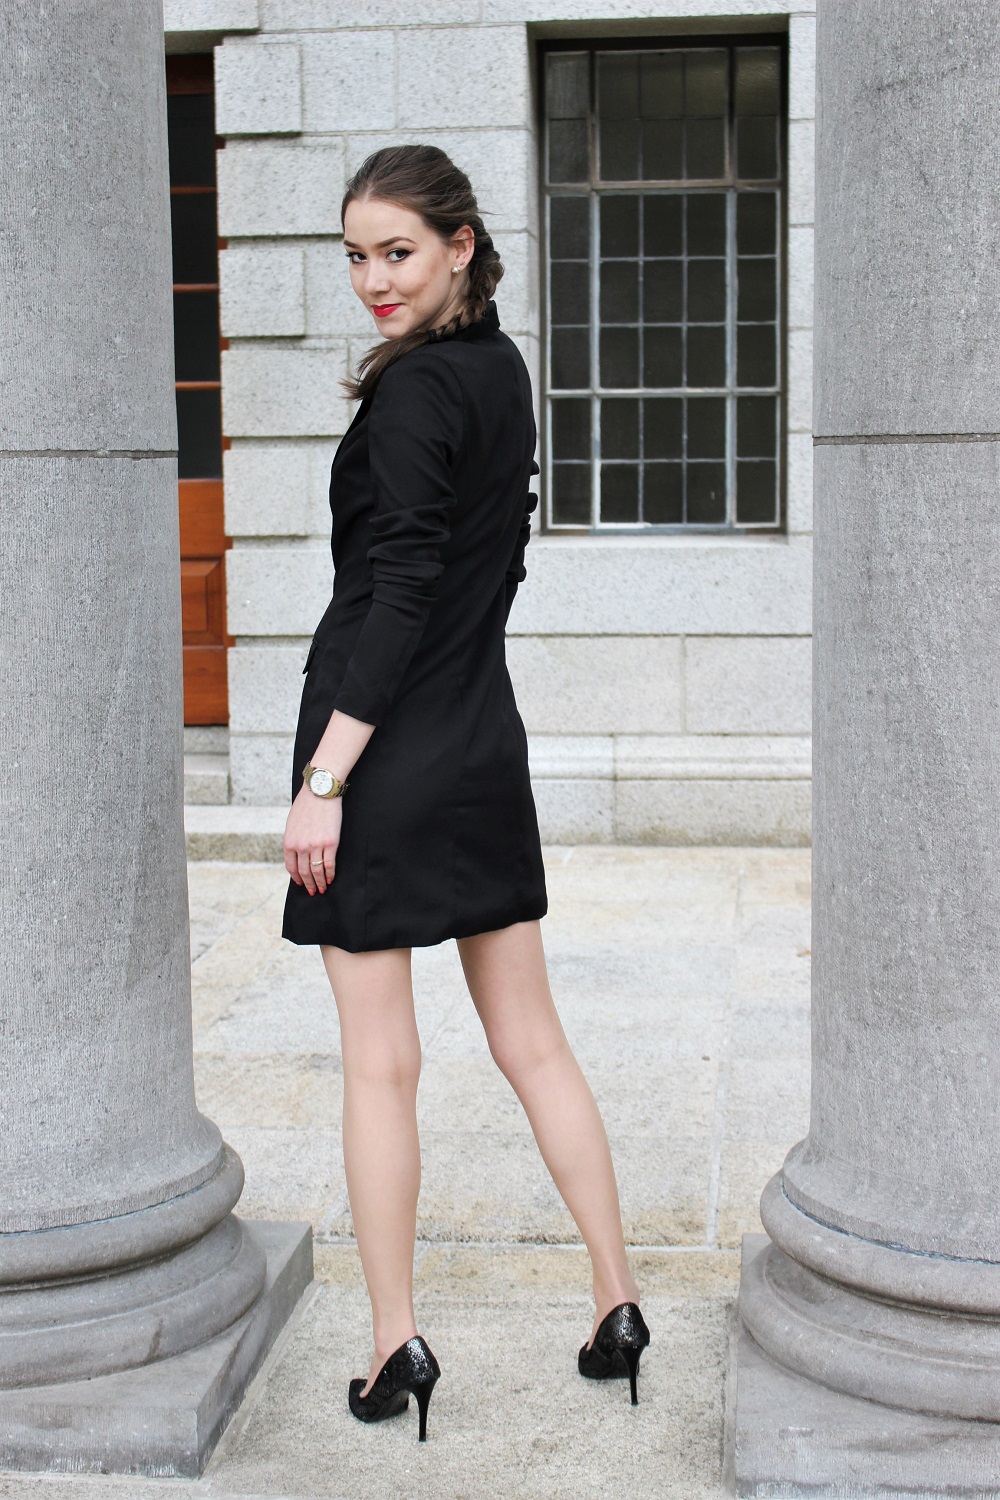 OOTD 46 :: Elegant Business Look : Blazer Dress and Pumps - Sinnamona